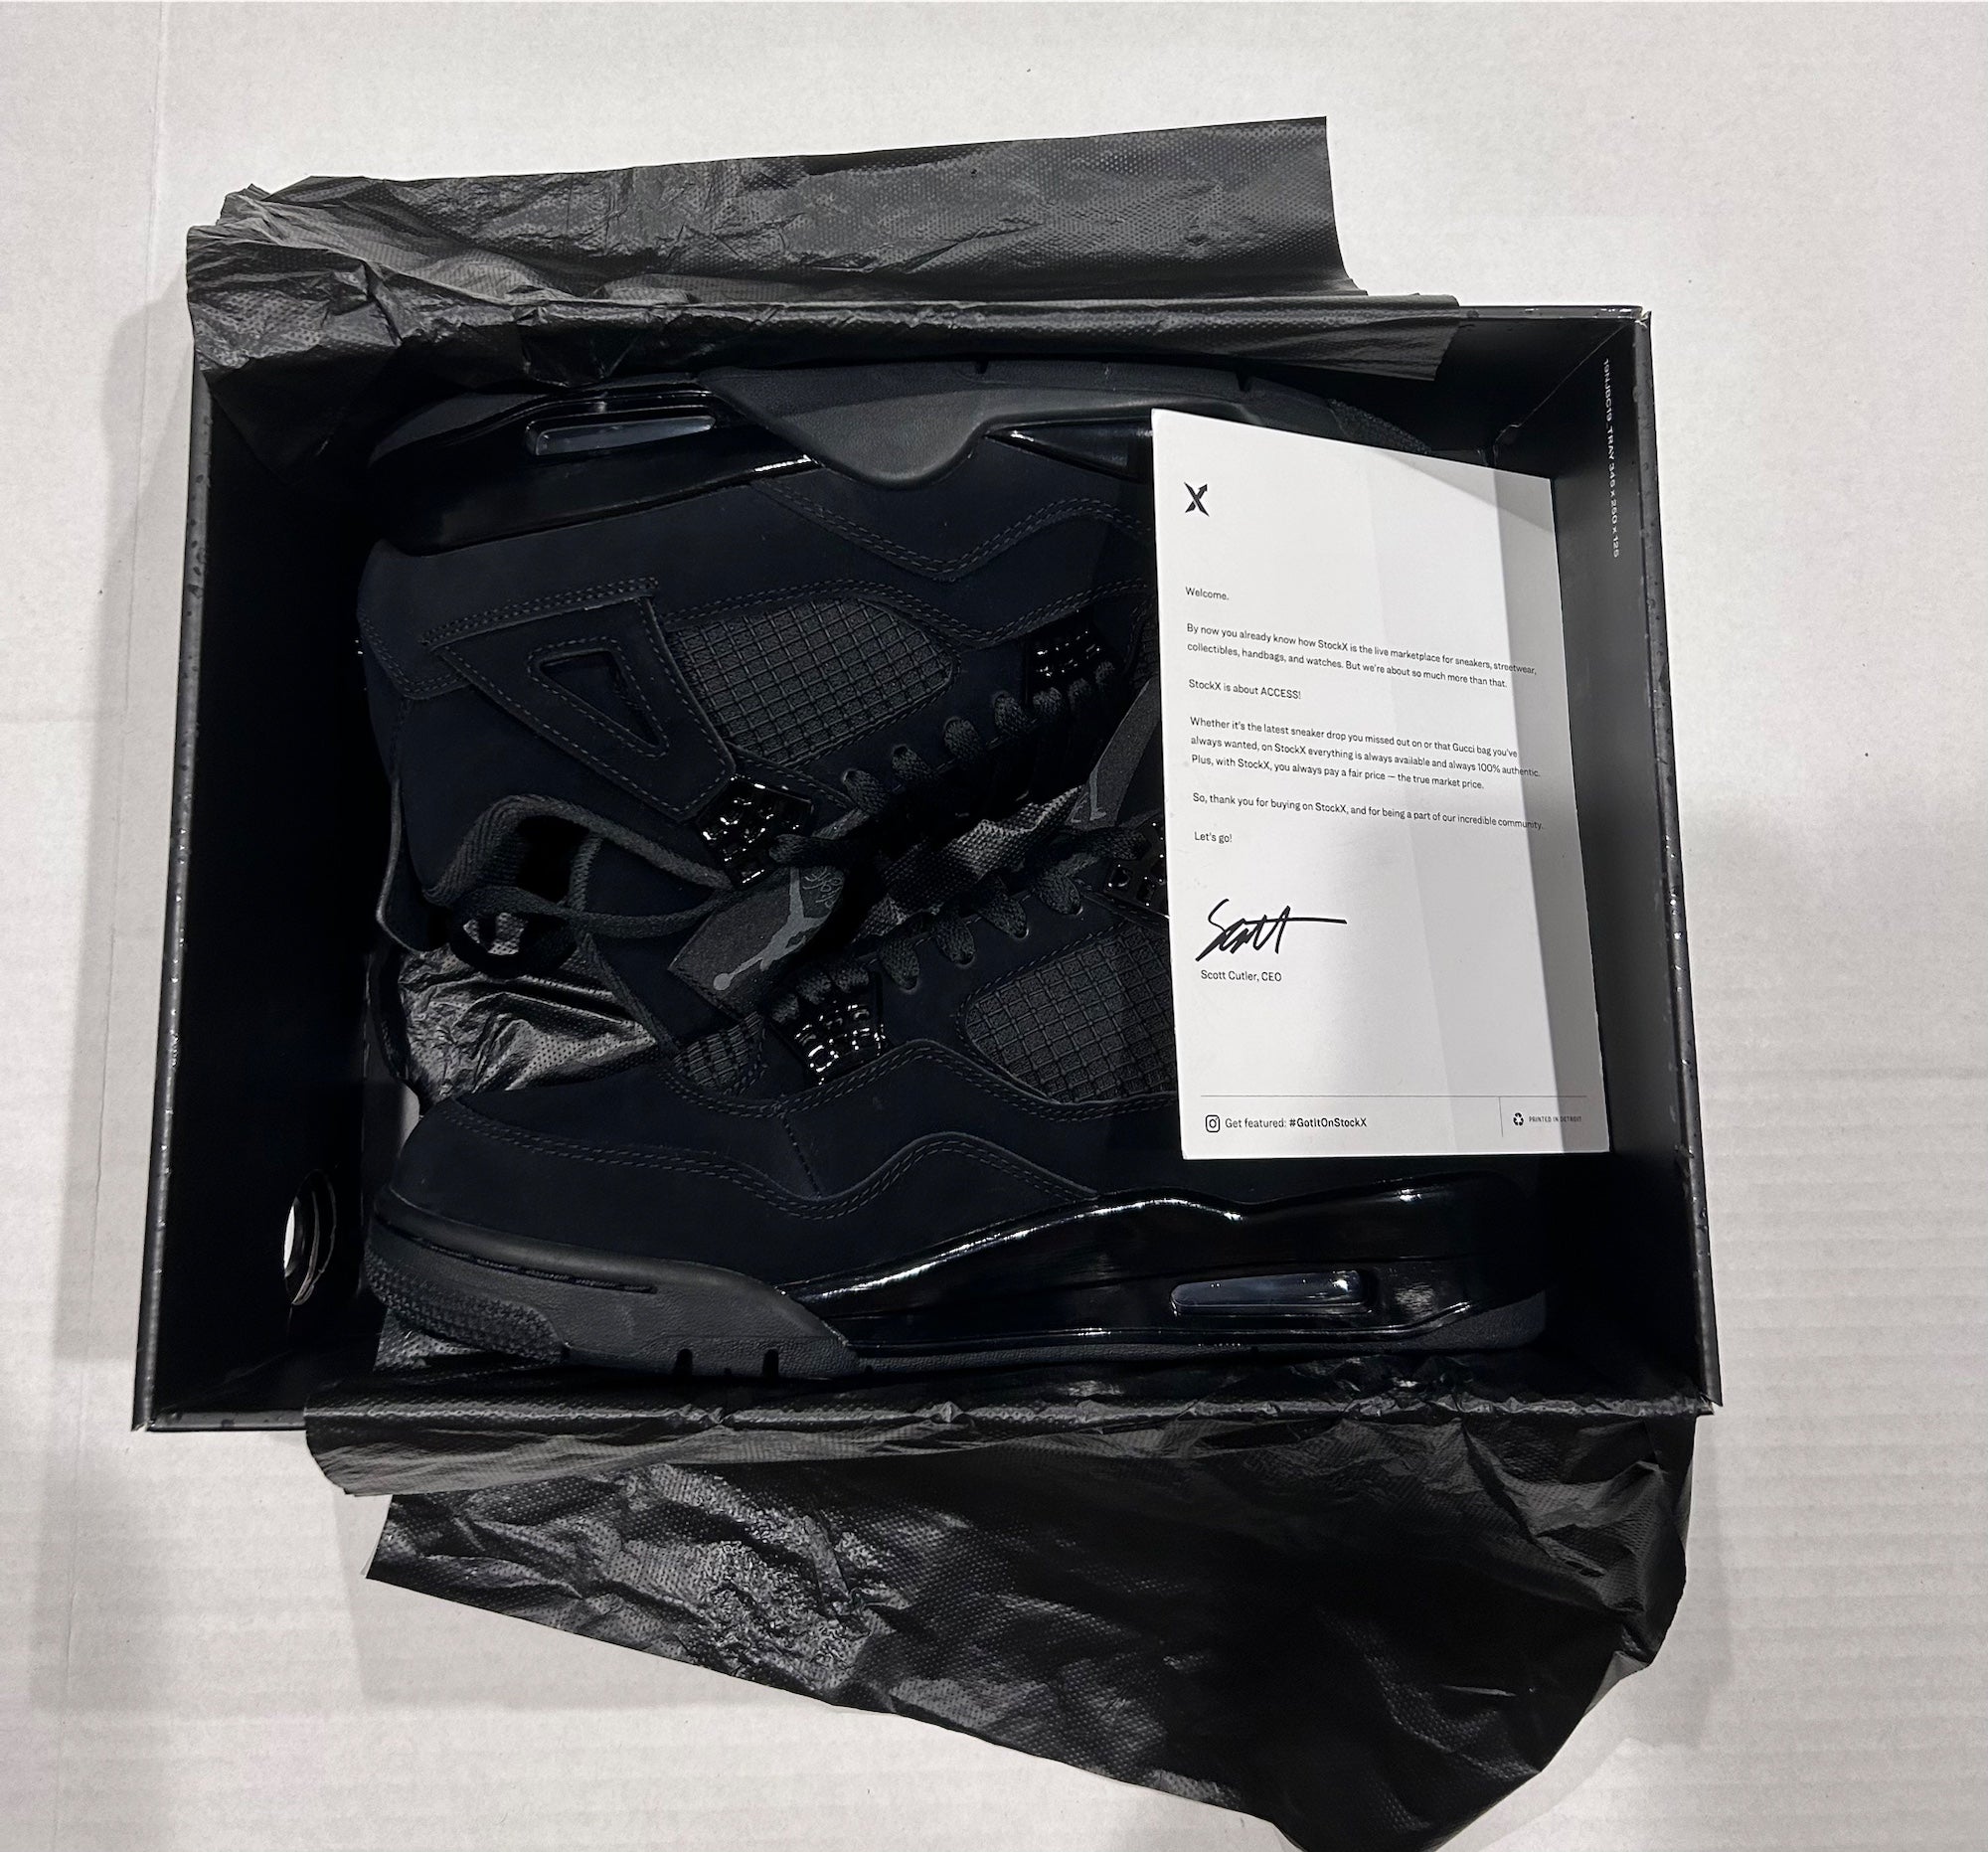 NEW Jordan 4 Retro “Black Cat” (With Original Box)